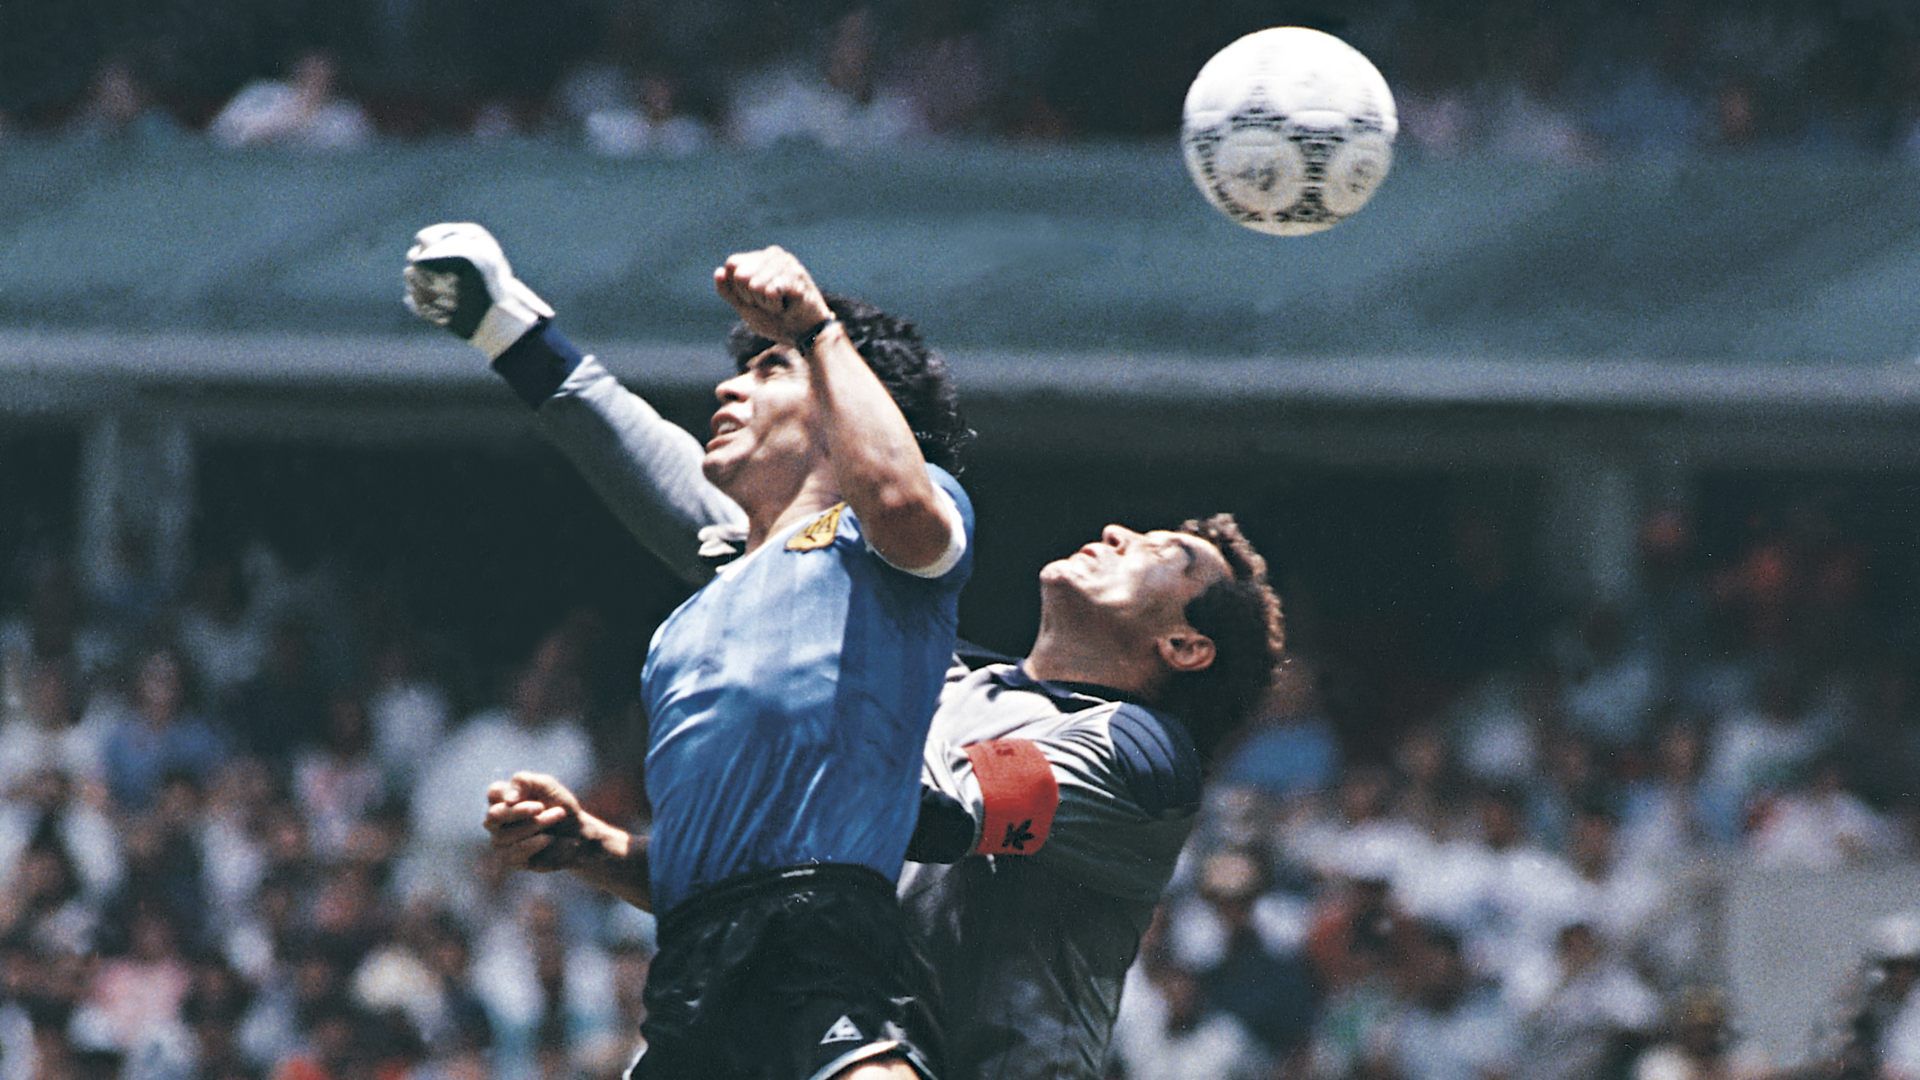 Диего Армандо Марадона рука Бога. Диего Марадона 1986 рука Бога. Диего Марадона 1986. Марадона Аргентина Англия 1986. Это была рука бога